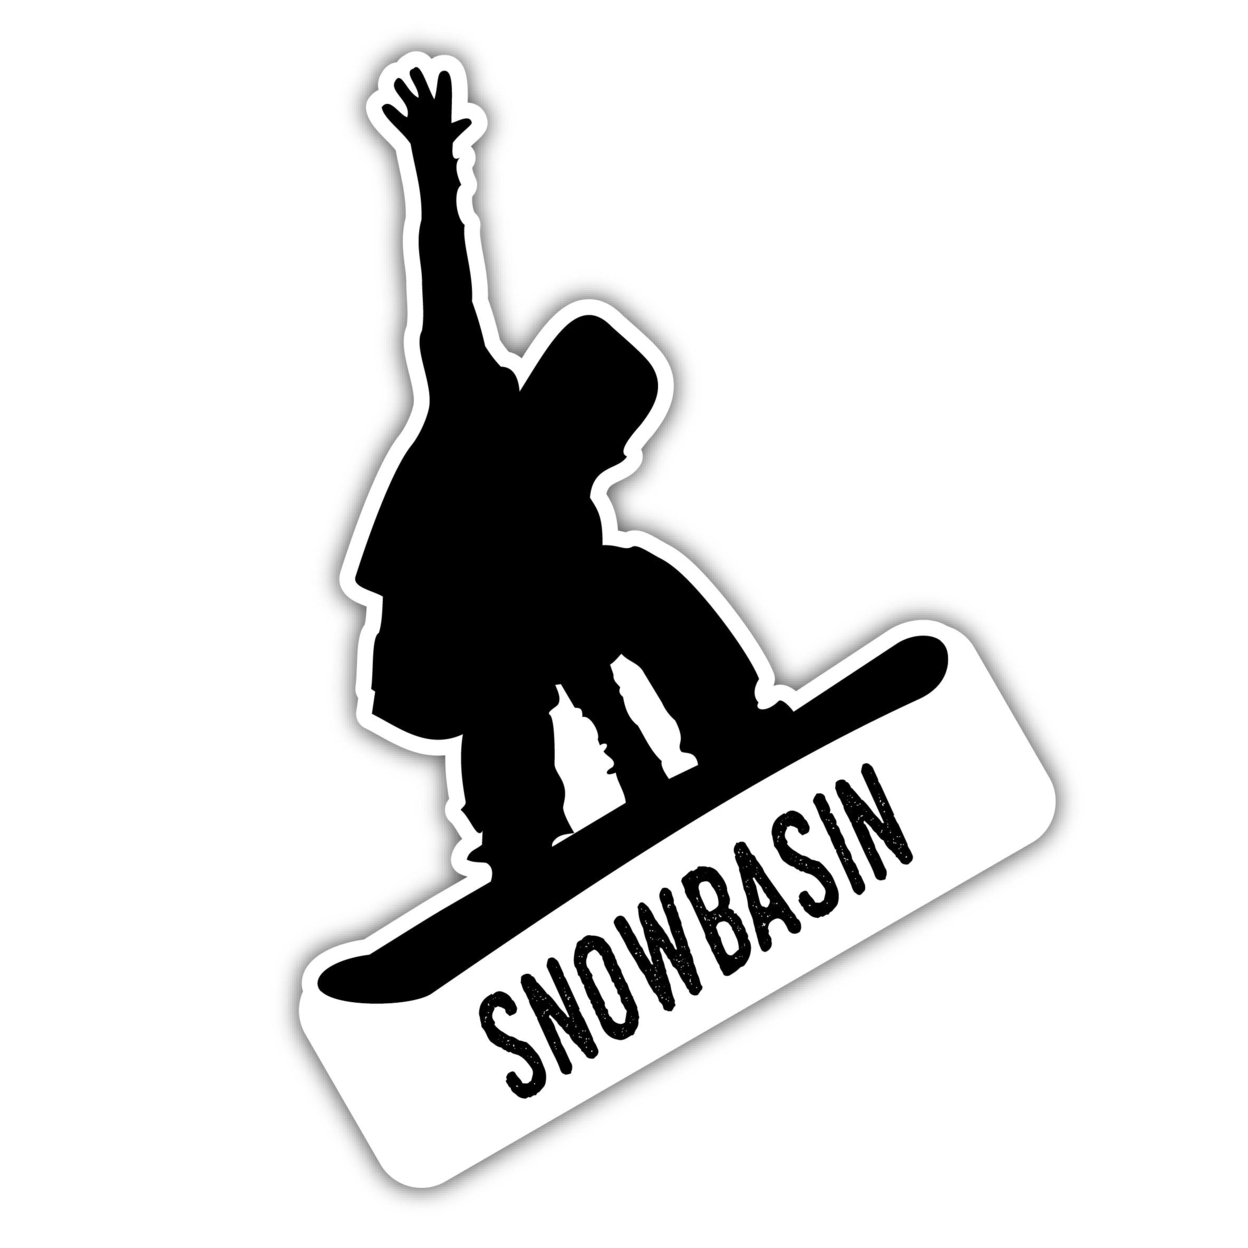 Snowbasin Utah Ski Adventures Souvenir Approximately 5 X 2.5-Inch Vinyl Decal Sticker Goggle Design